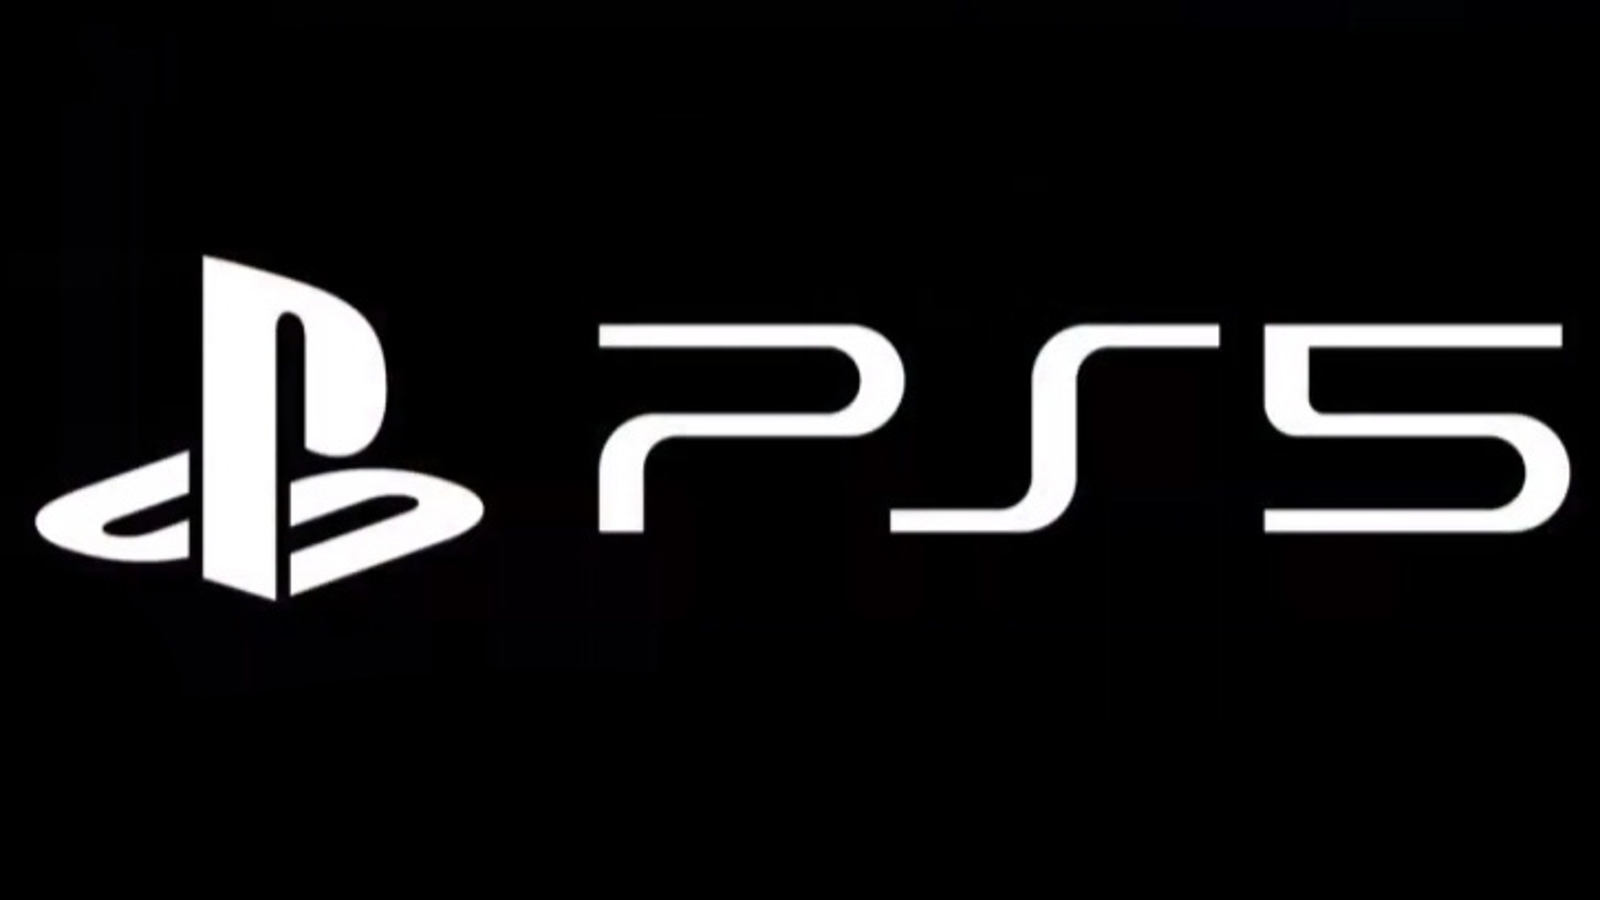 PlayStation 